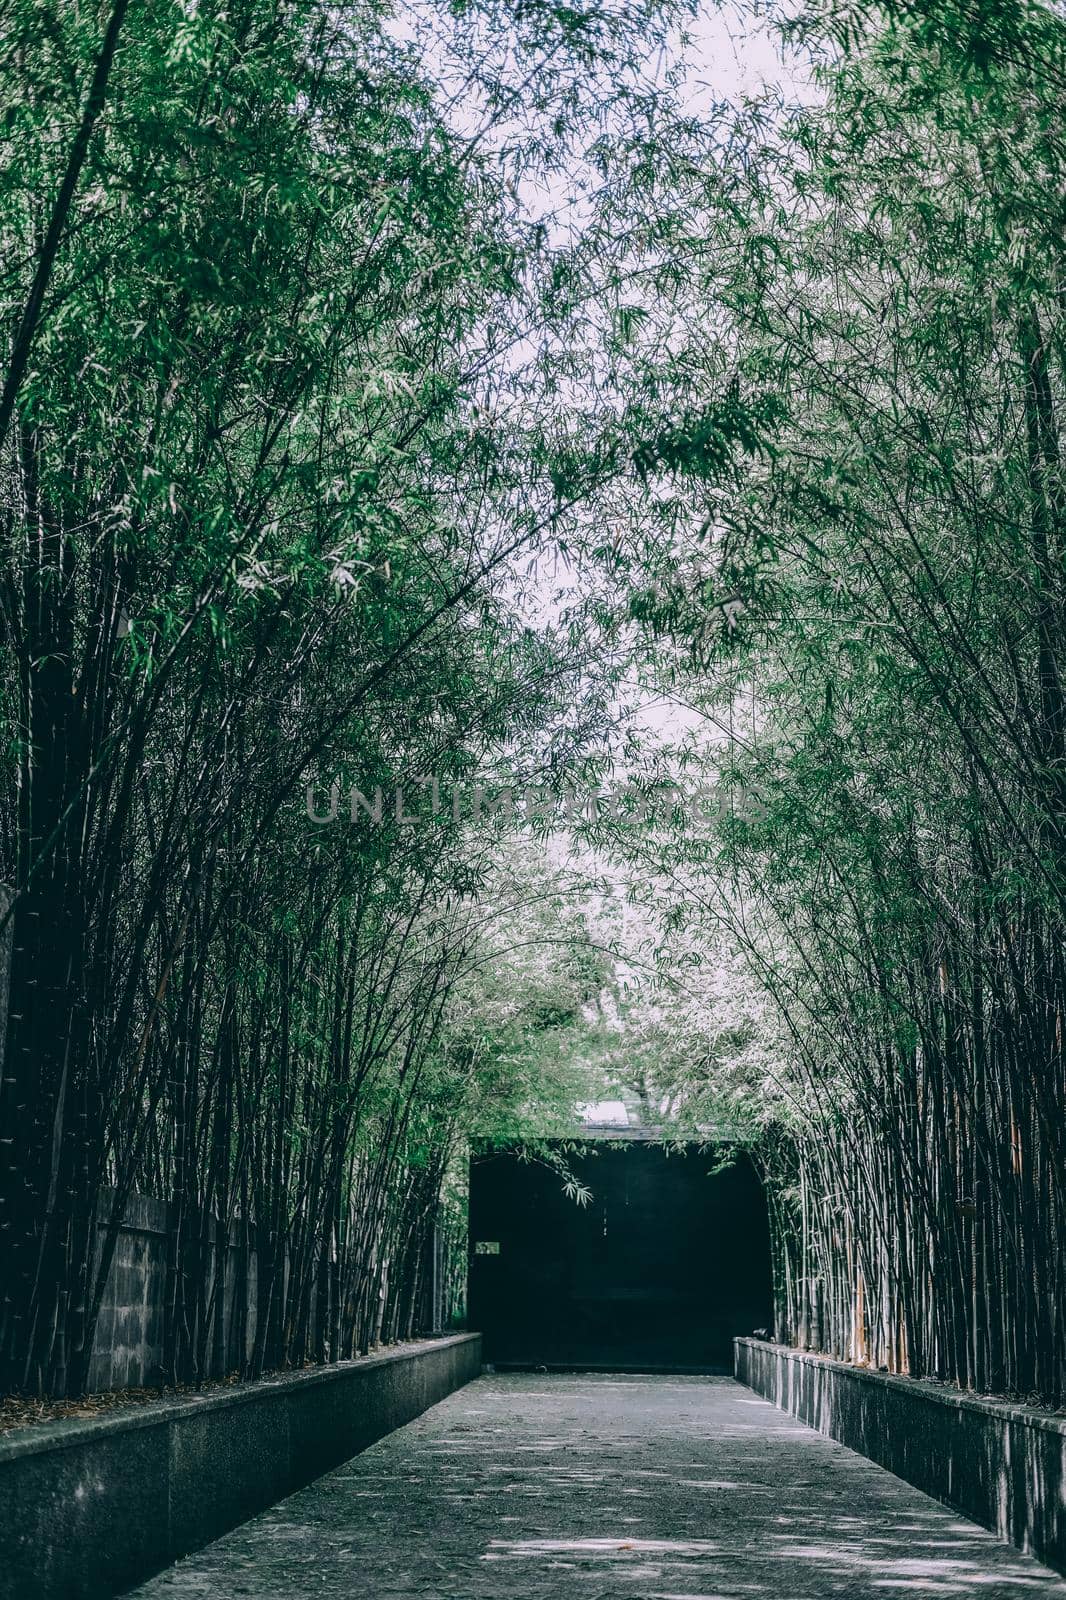 bamboo tree tunnel & walkway pathway road in garden